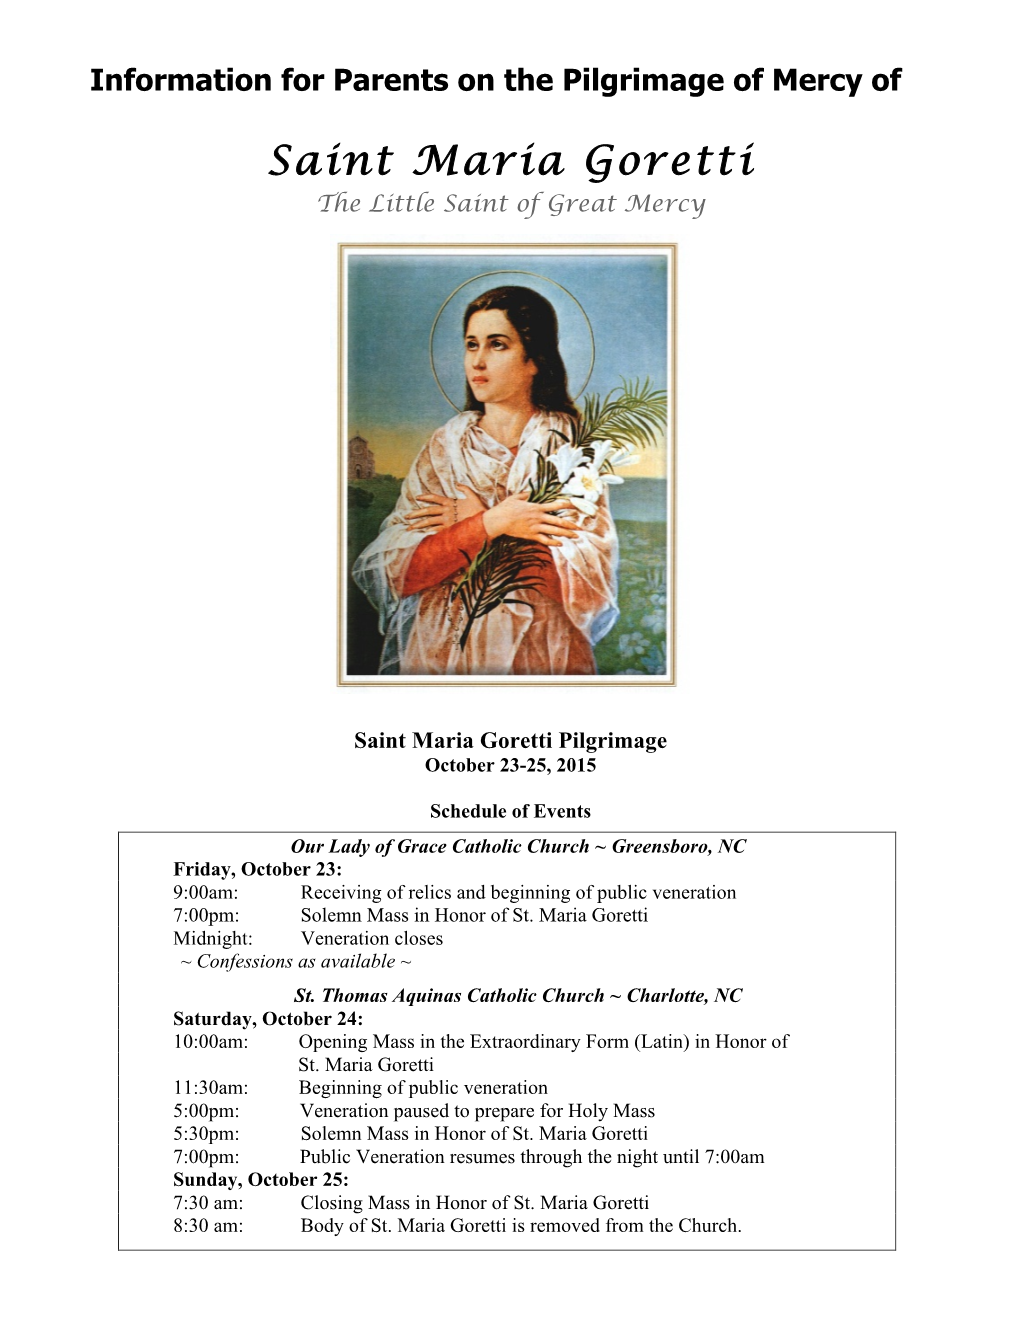 Saint Maria Goretti the Little Saint of Great Mercy